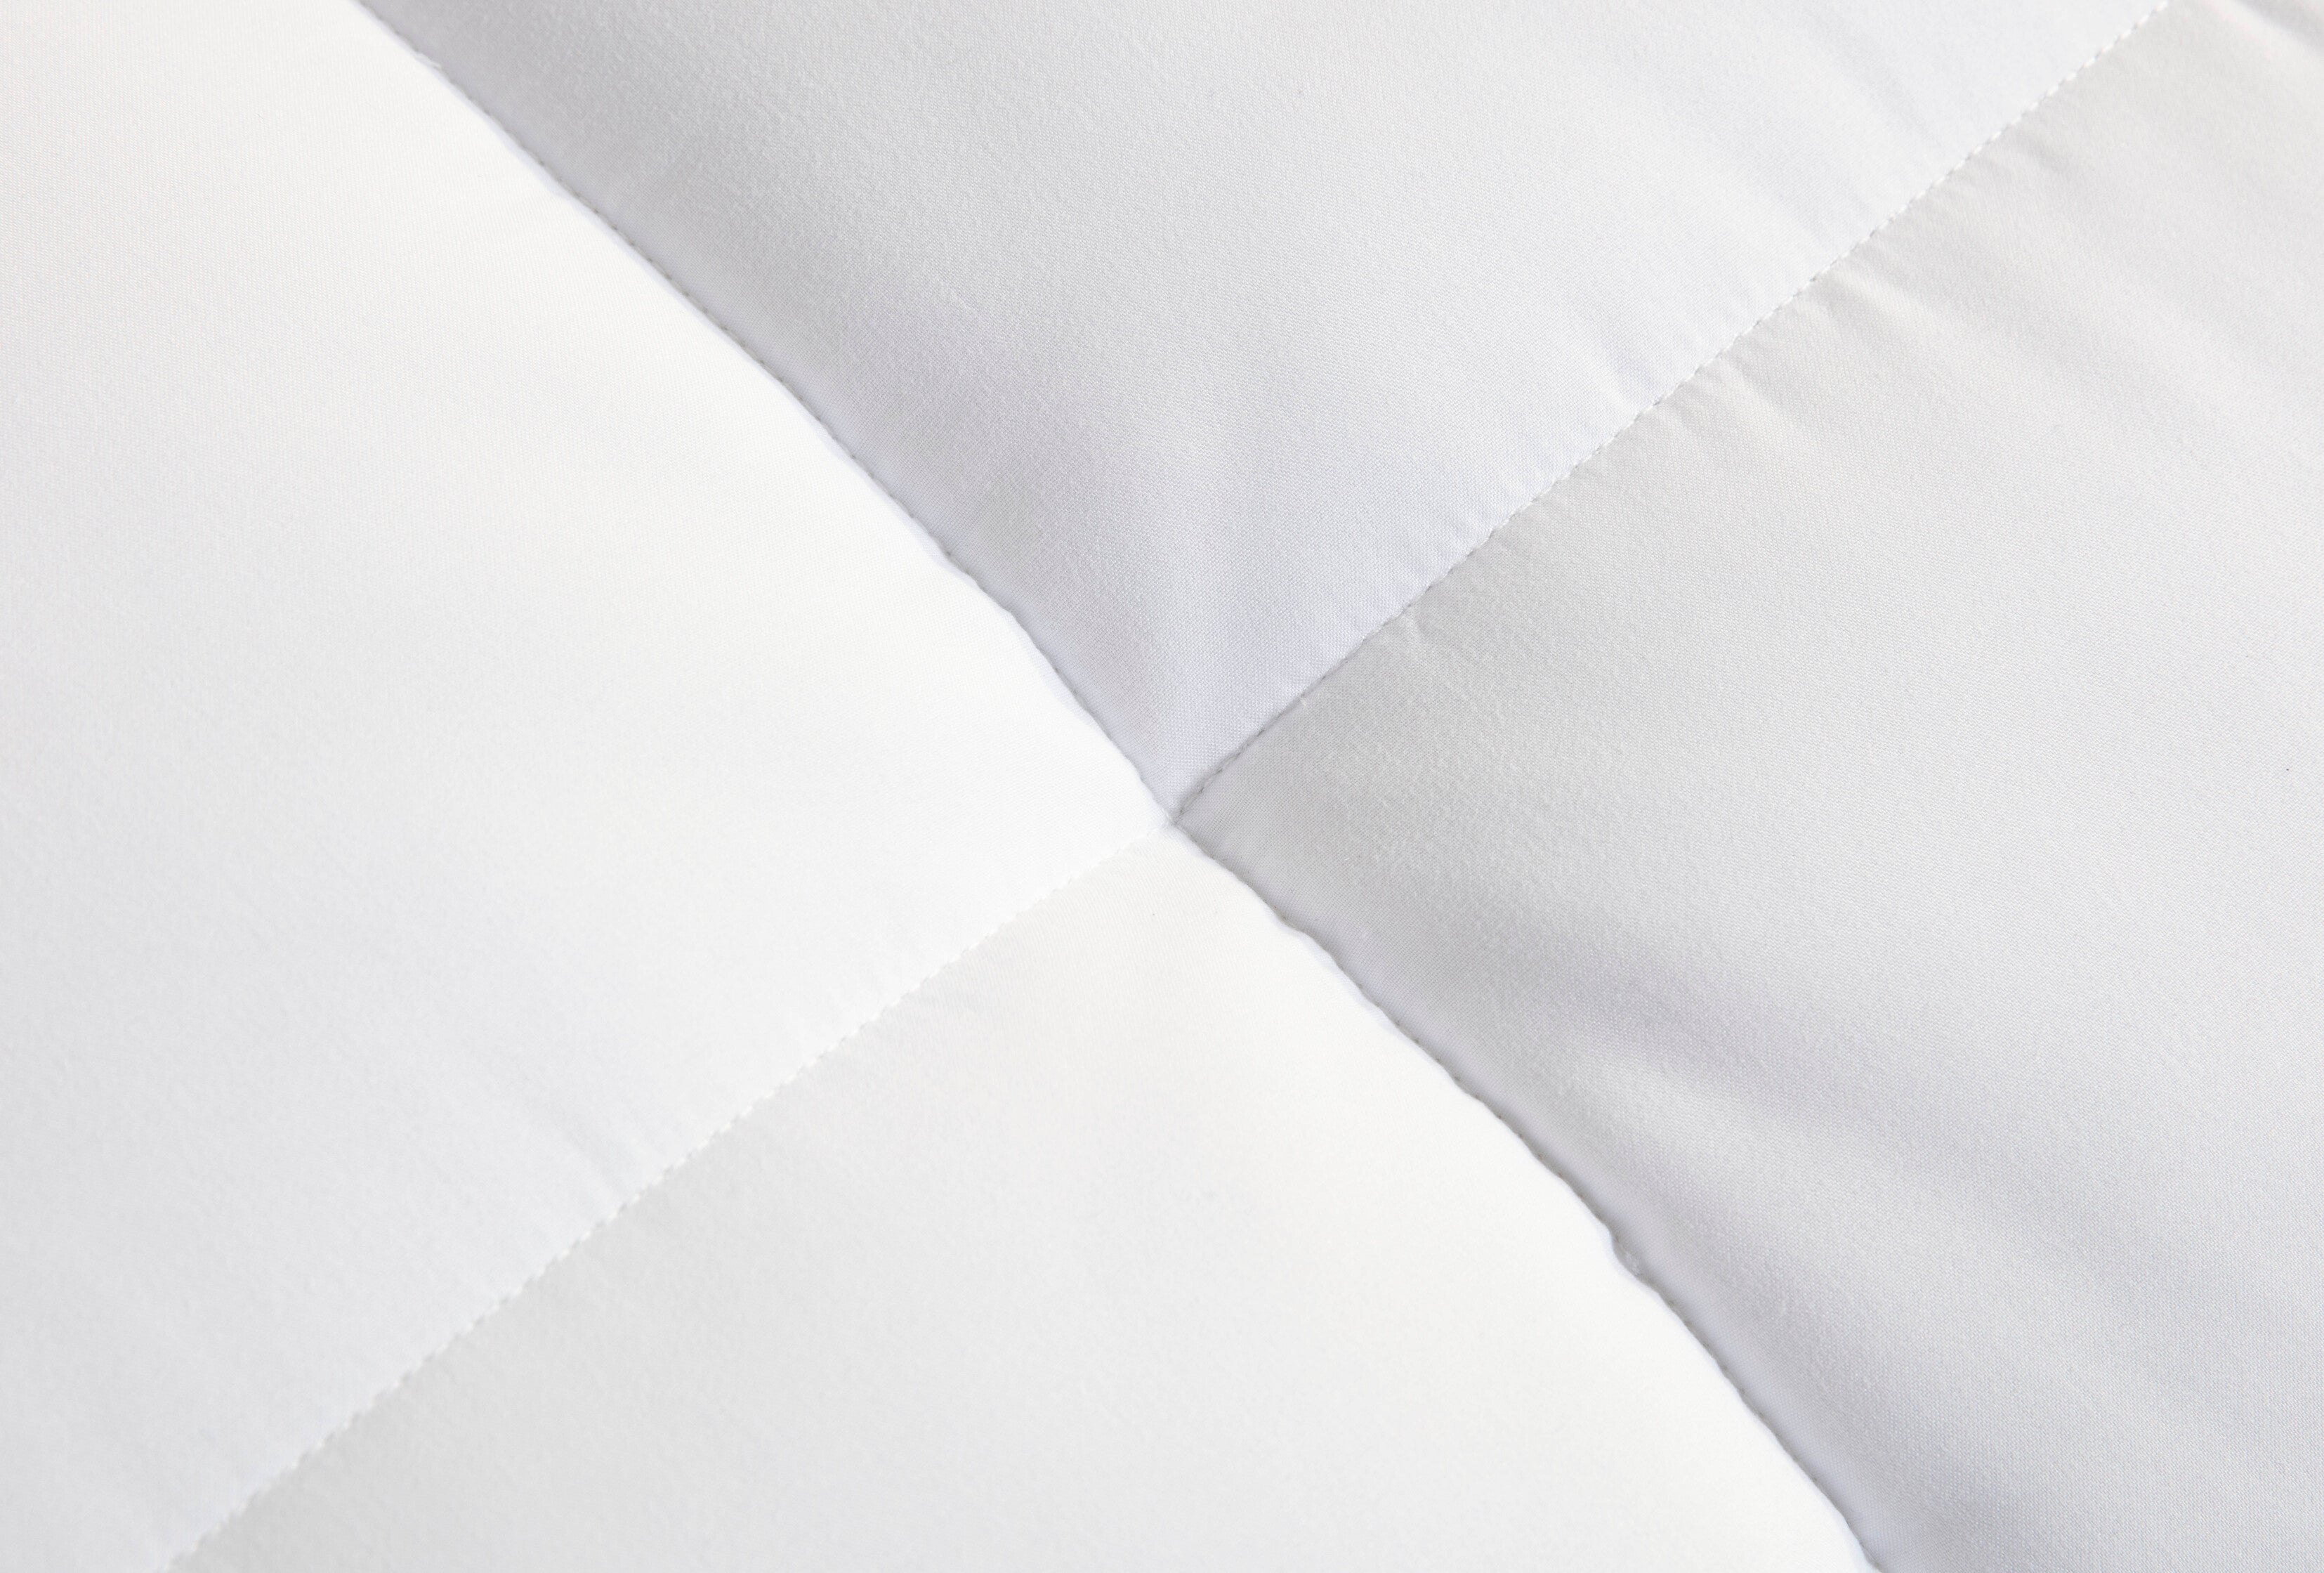 Fluffy White Down Alternative Comforter 300 GSM, kingsleytrend, , 32916_b09rt7749p_35251_1ced1, comforter, MCF, kingsleytrend